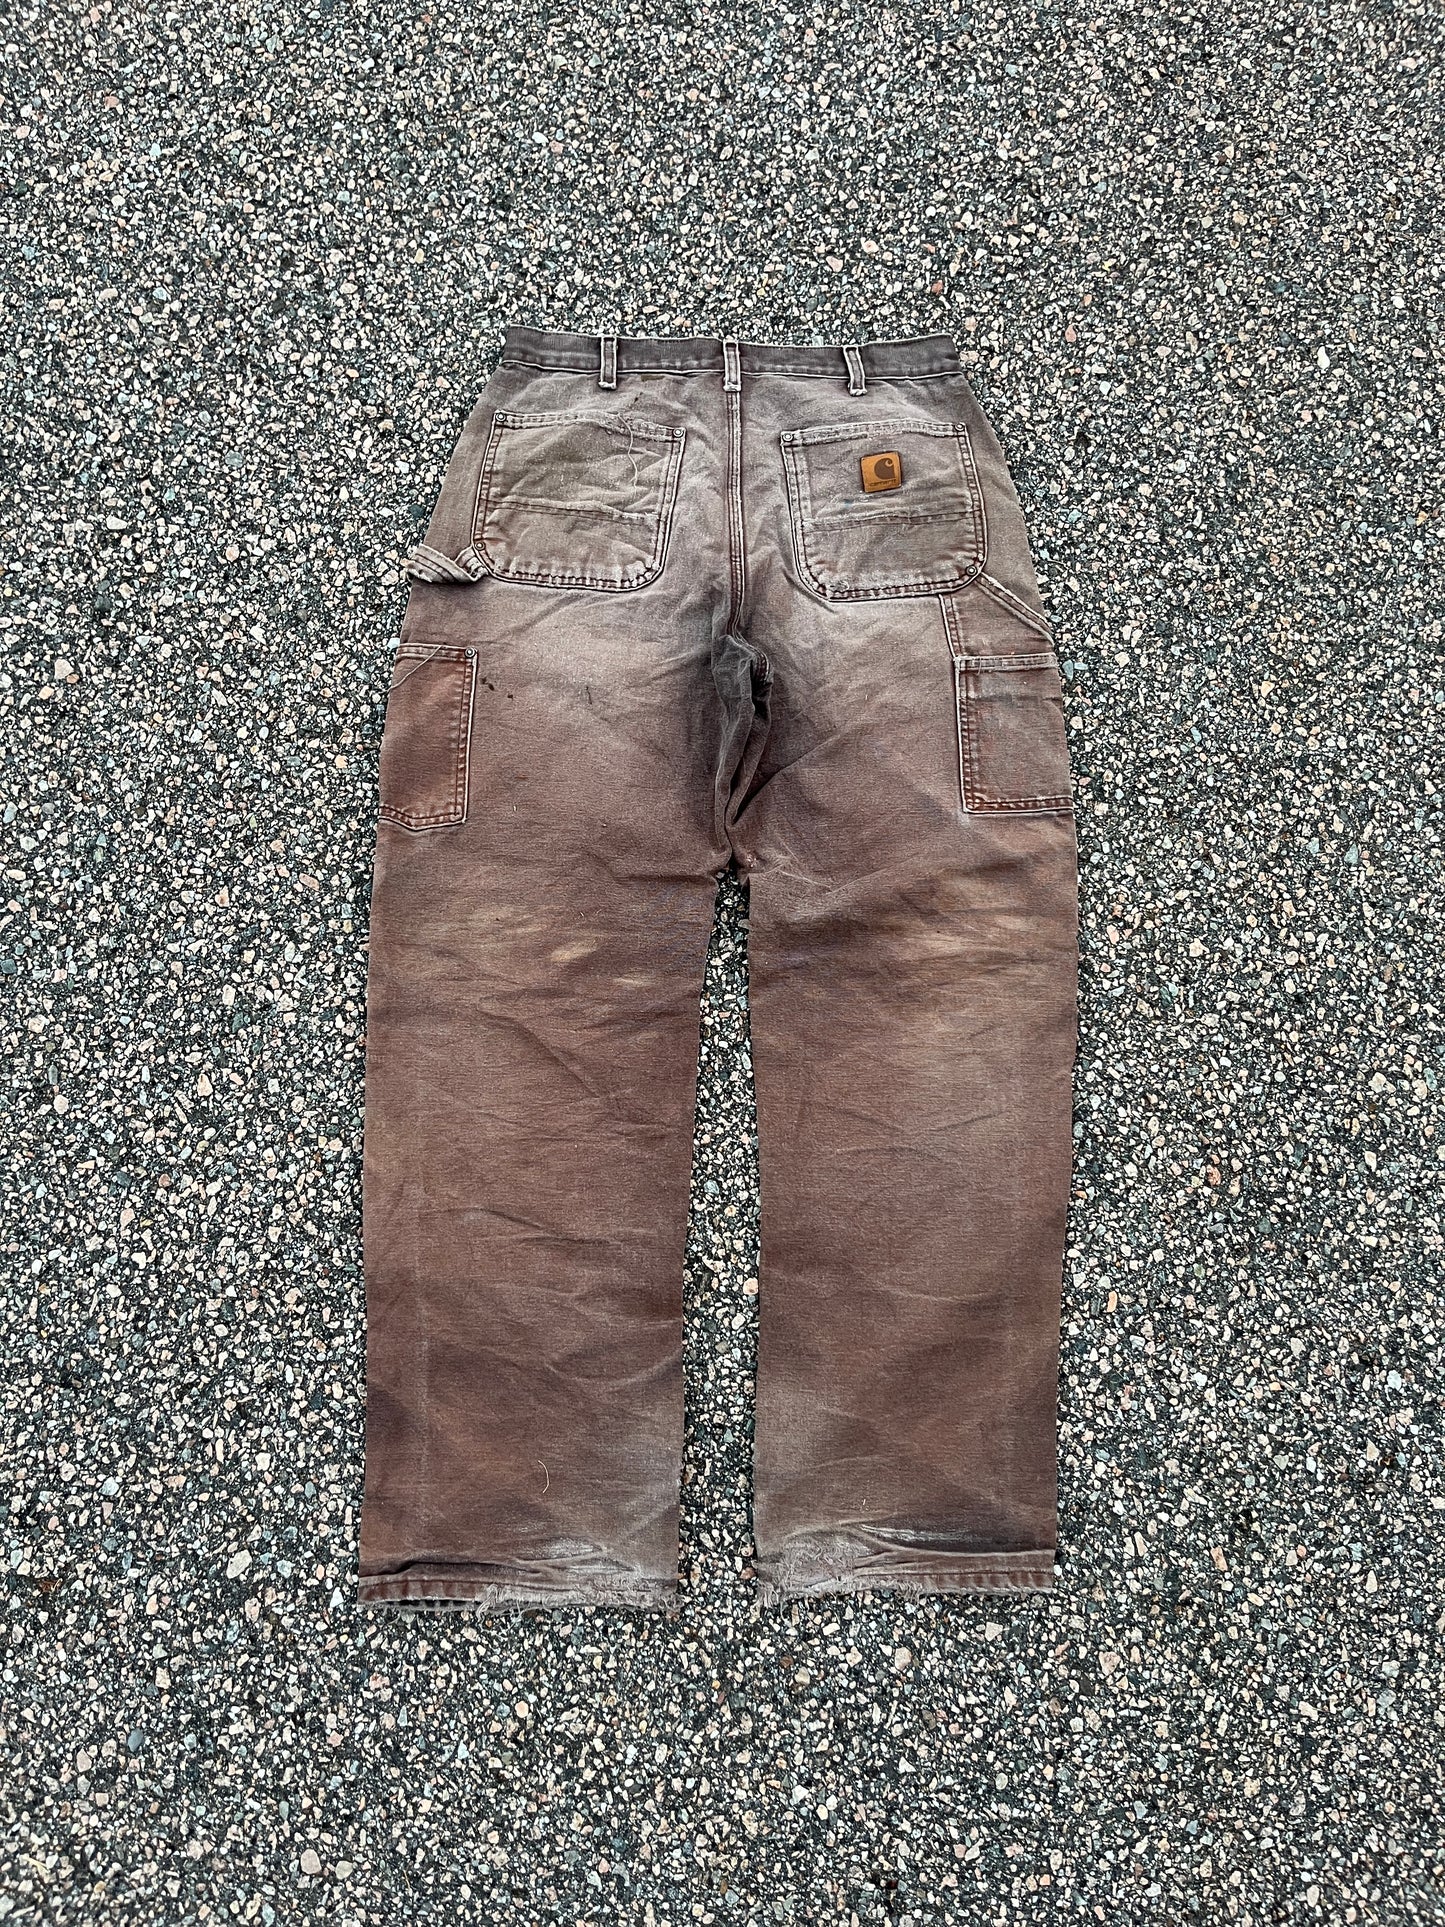 Faded Brown Carhartt Double Knee Pants - 32 x 31